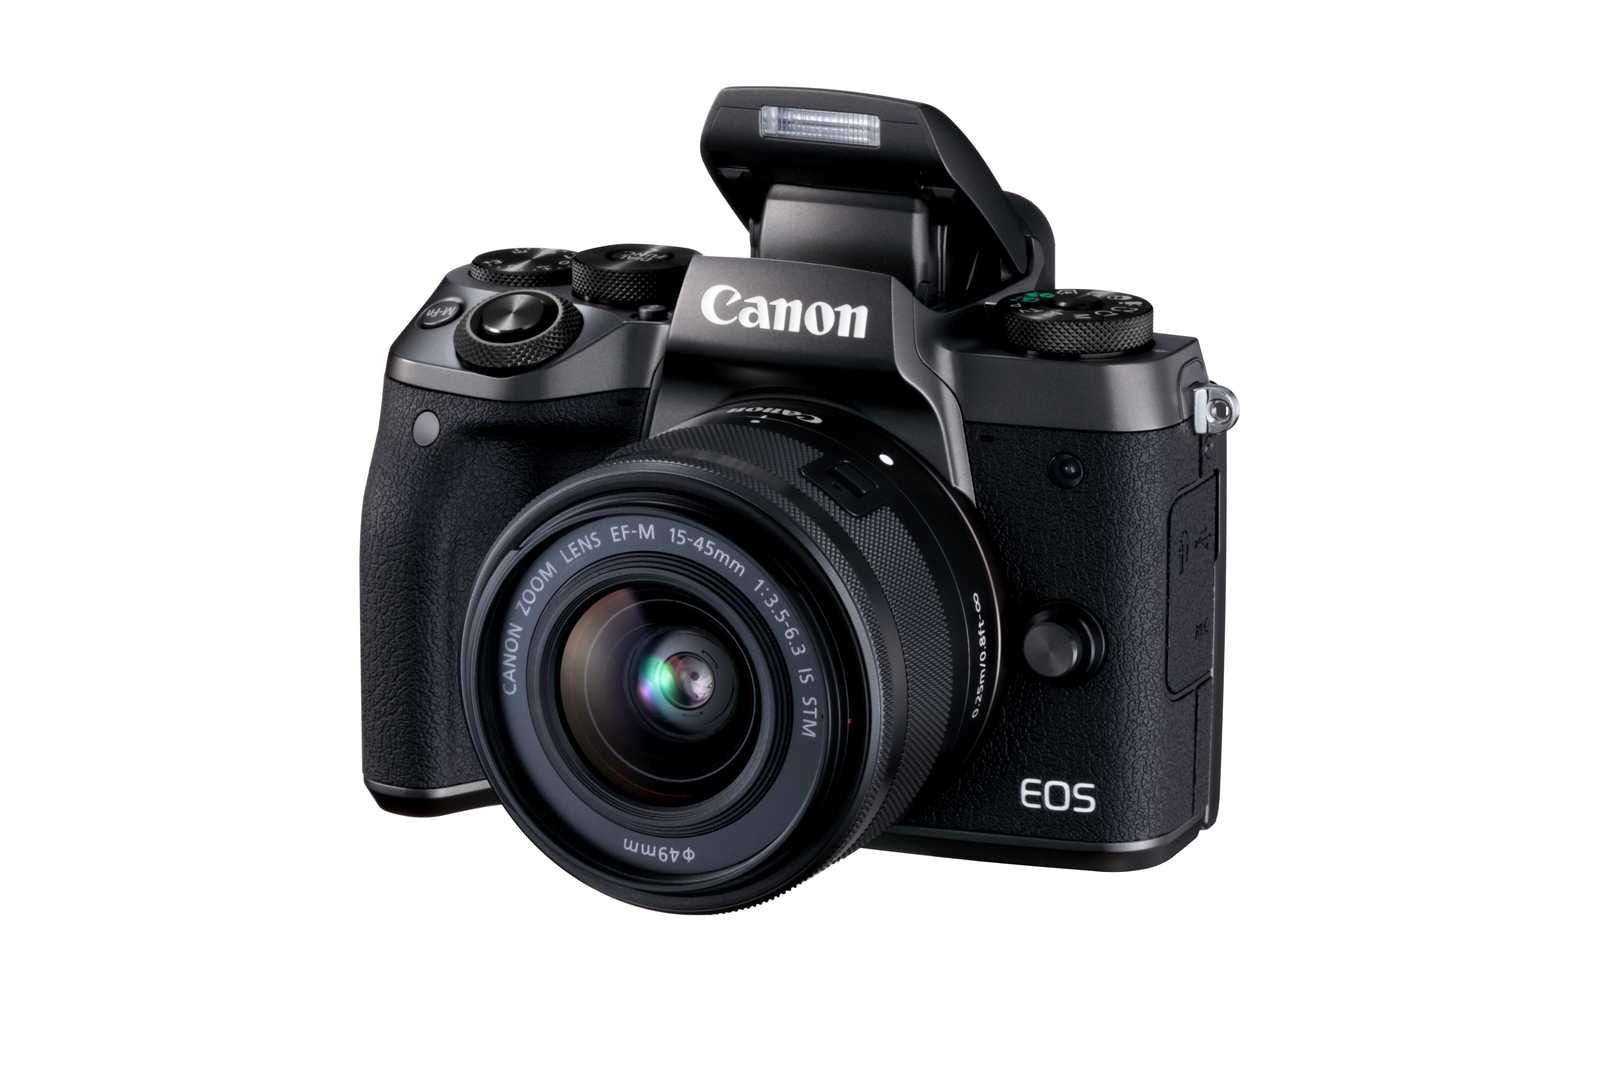 Canon EOS M5 flash